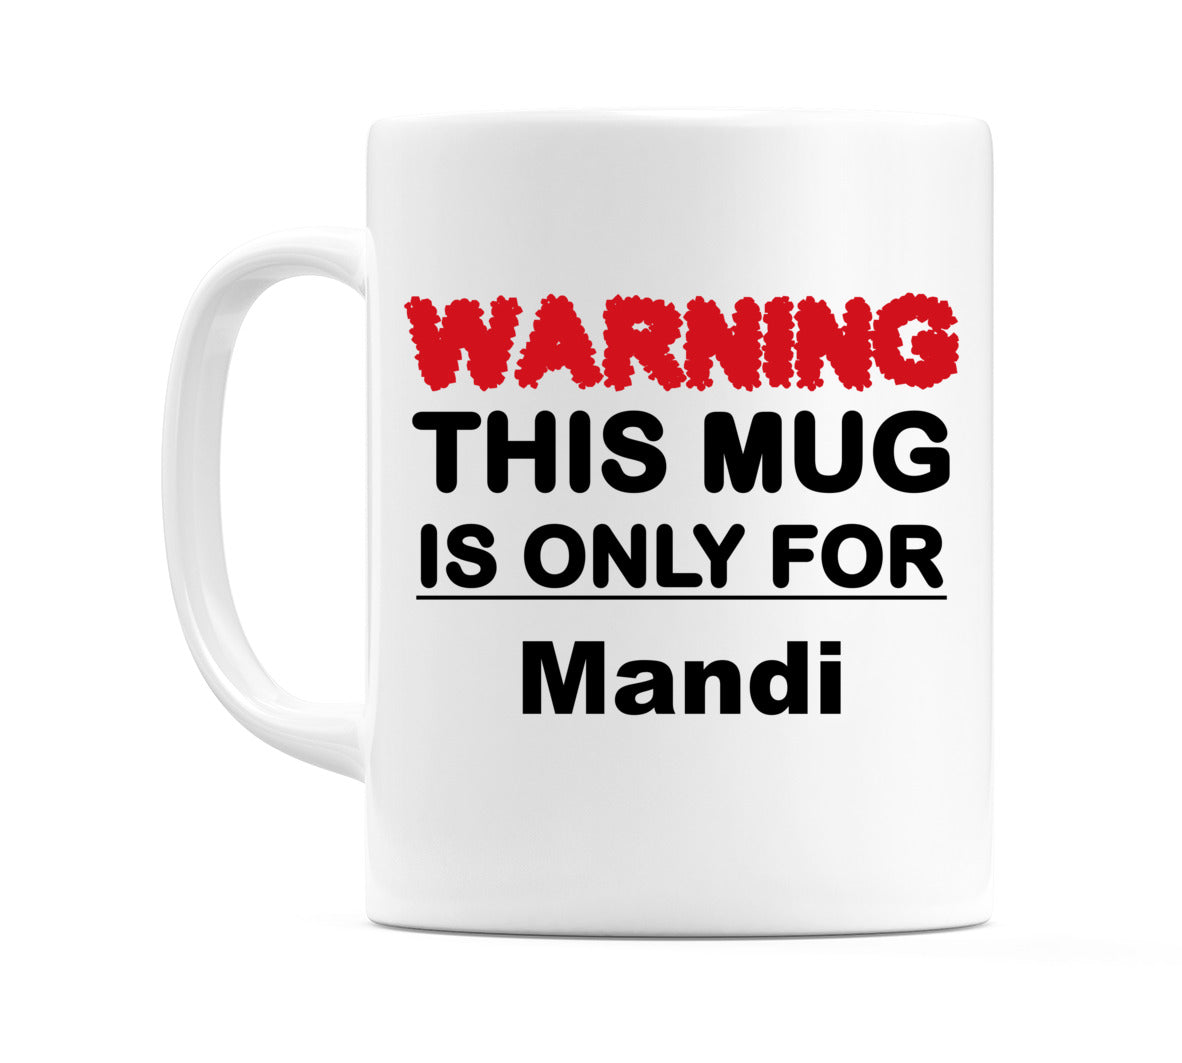 Warning This Mug is ONLY for Mandi Mug